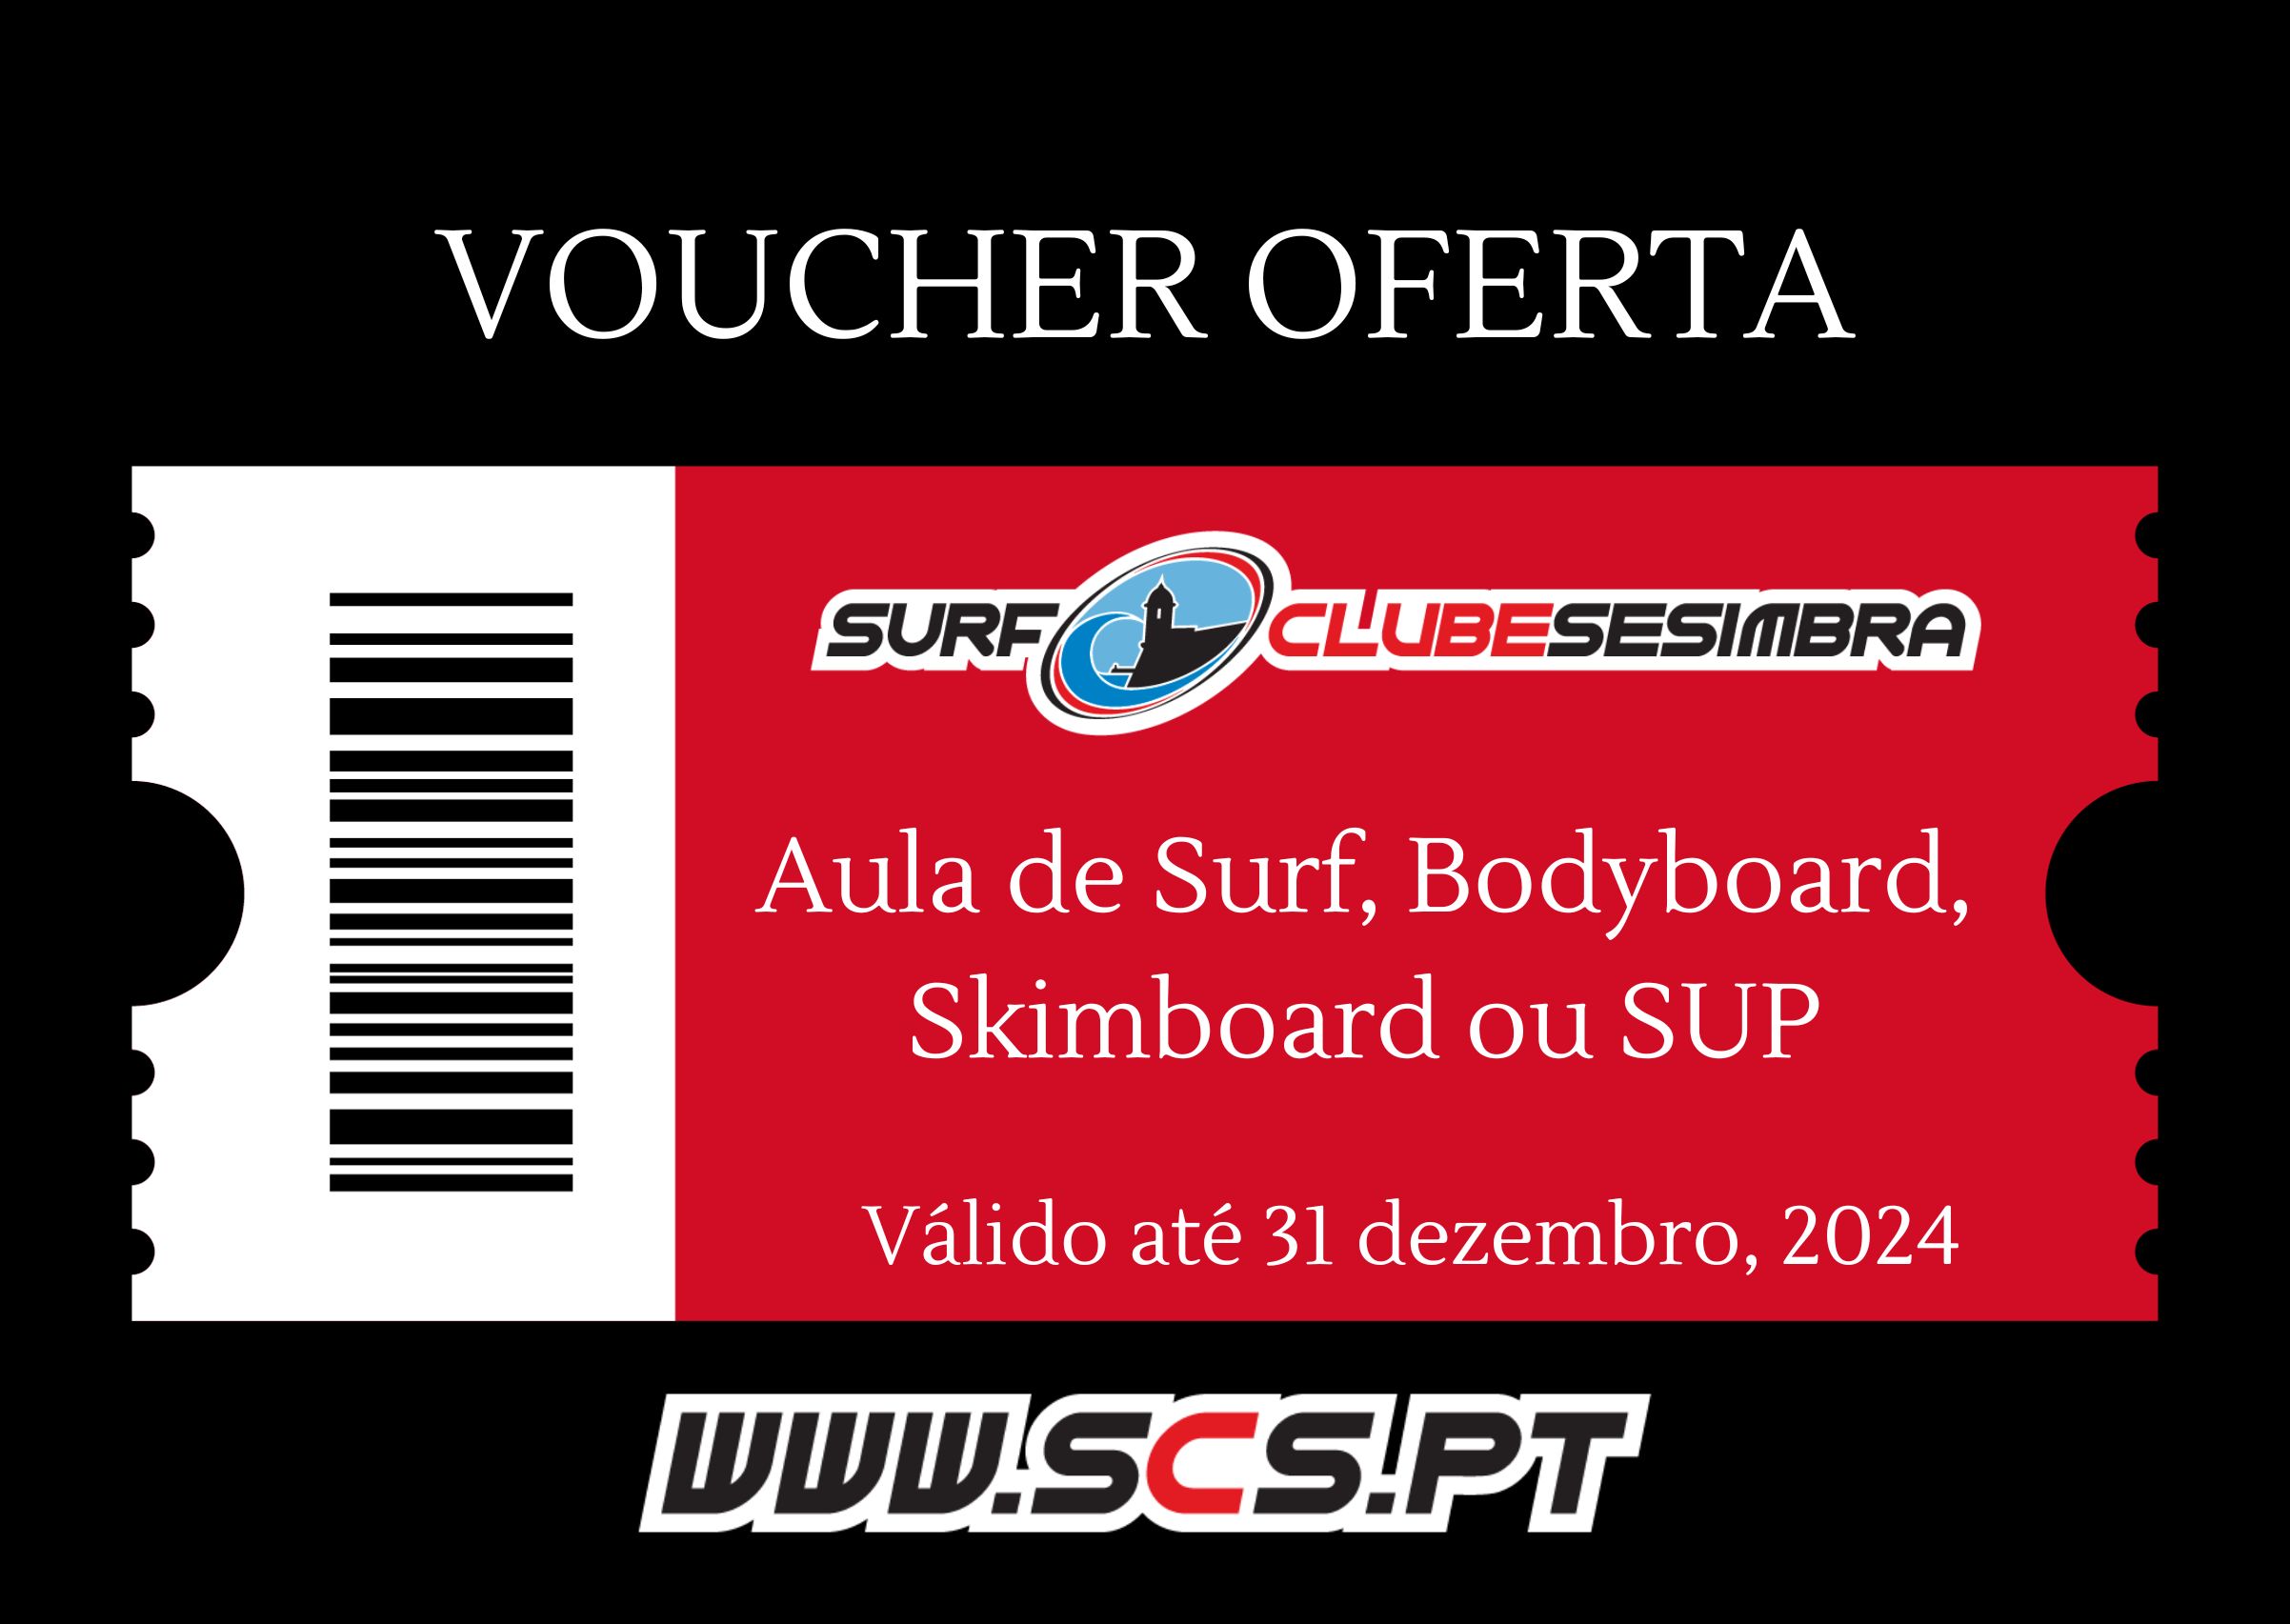 Voucher Oferta Aula Surf, Bodyboard, Skimboard ou SUP